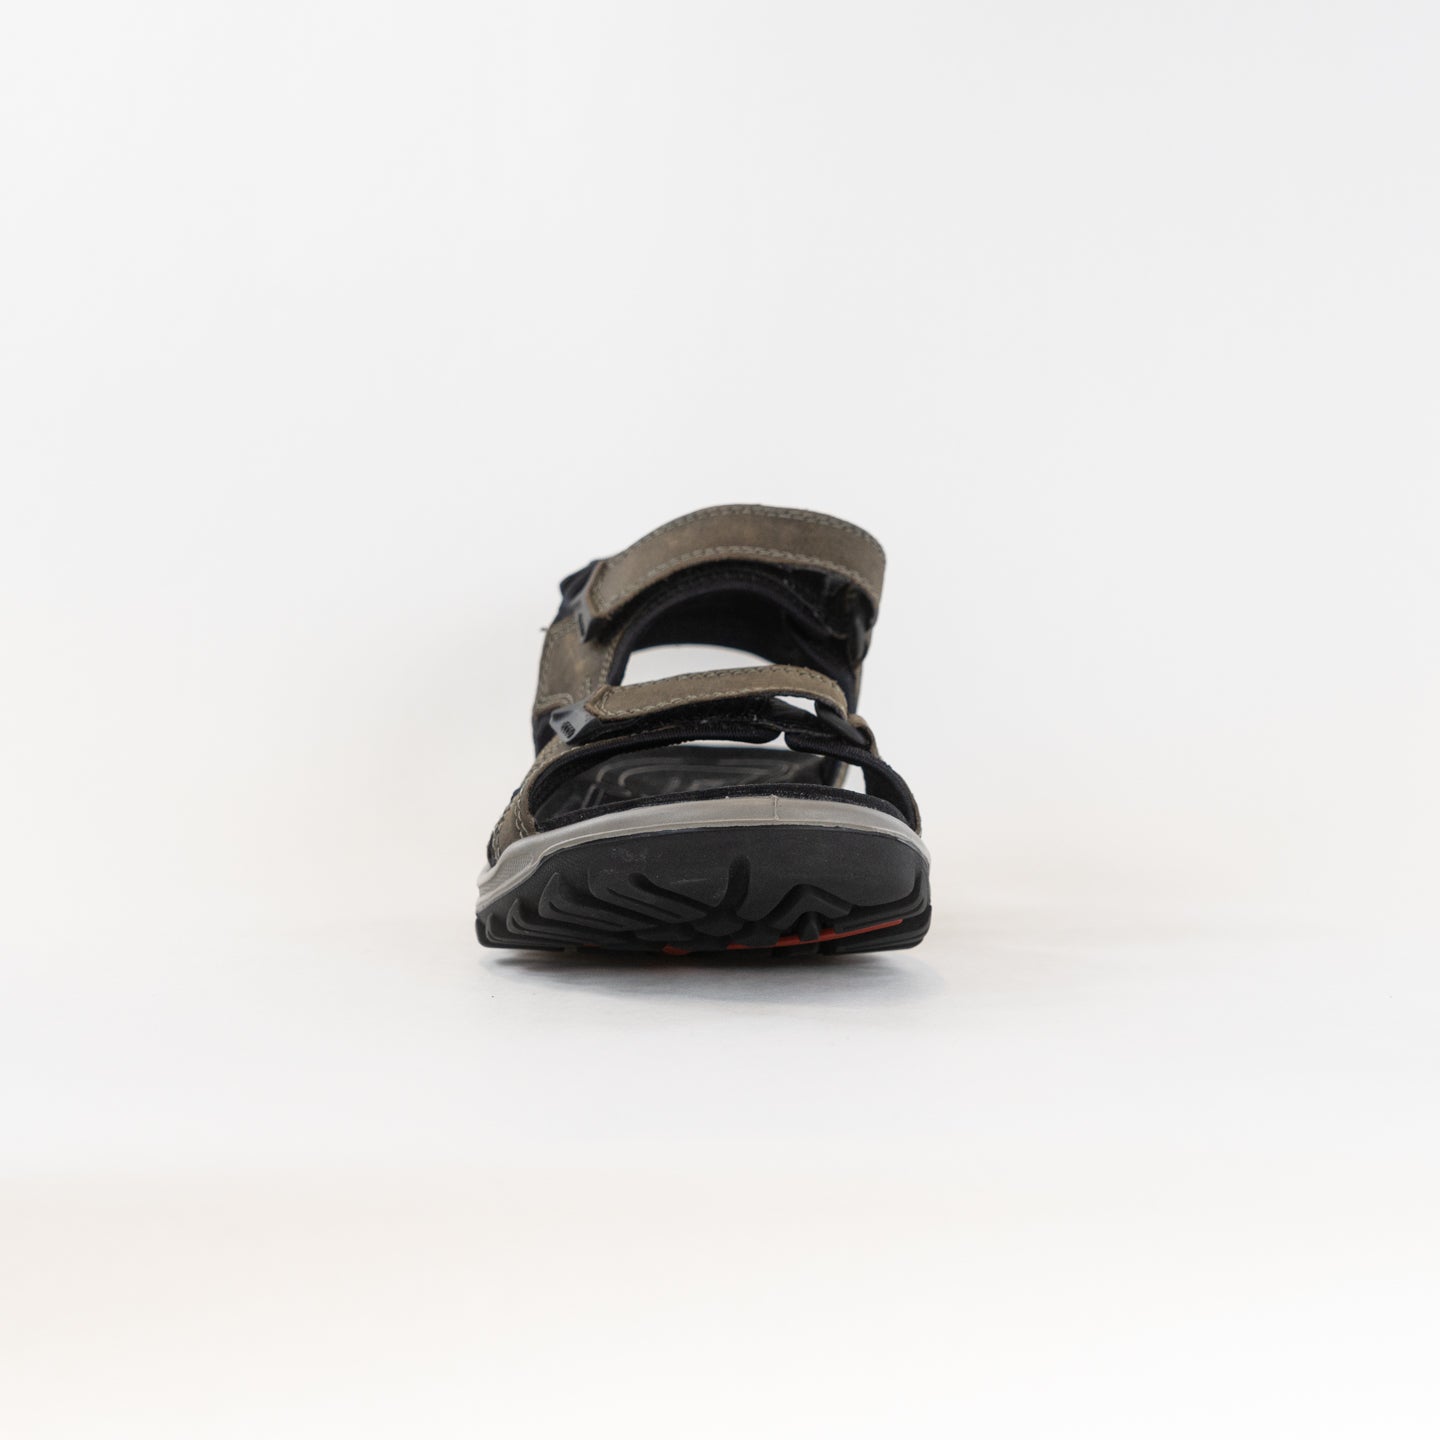 ECCO Offroad Sandal (Men's) - Dark Clay